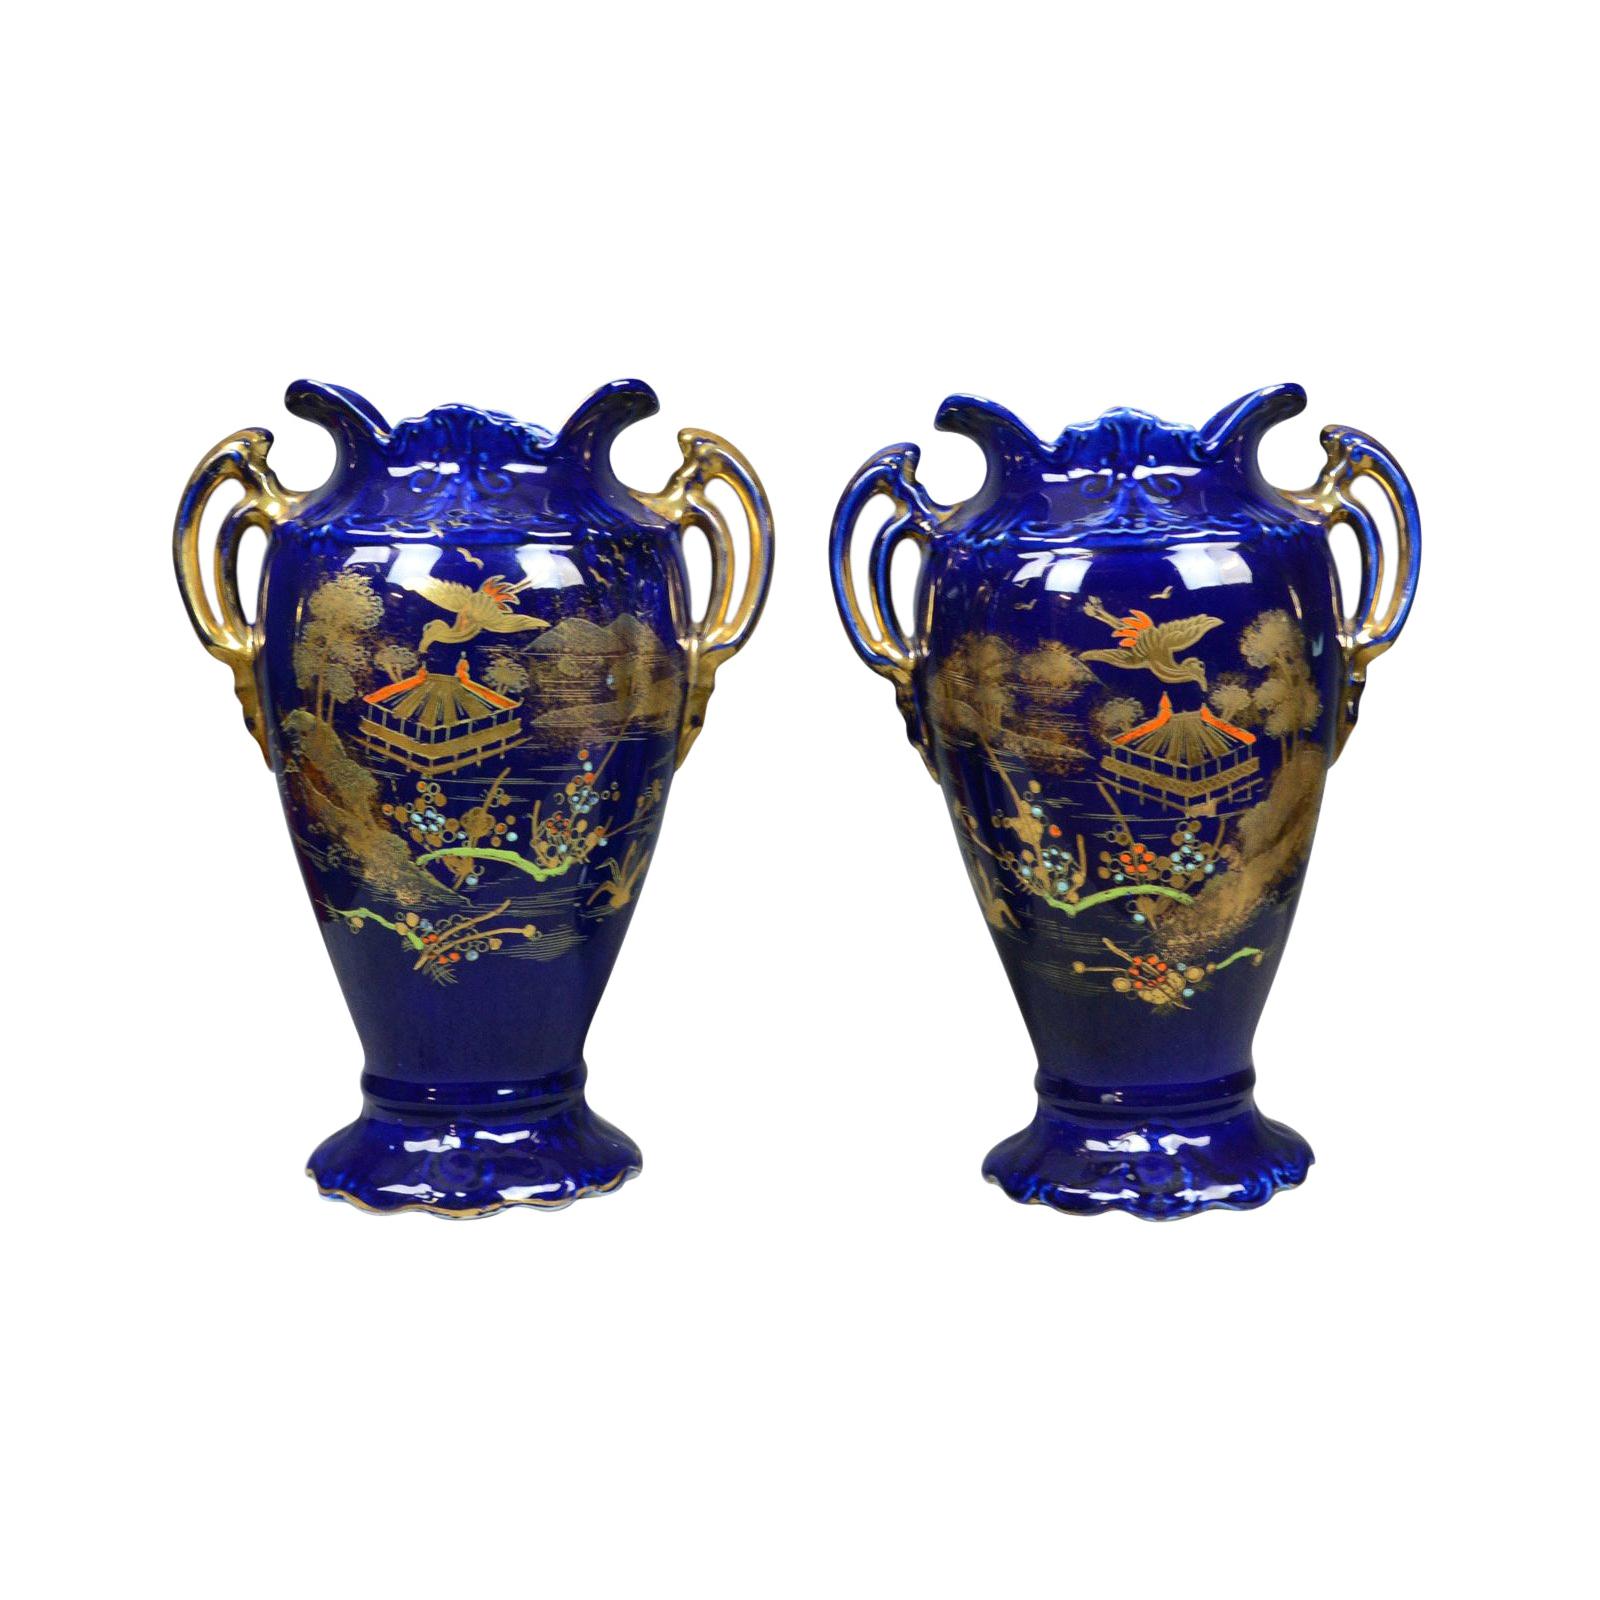 Pair of Decorative Baluster Vases, Ceramic Urns, Gold, Blue, Late 20th Century